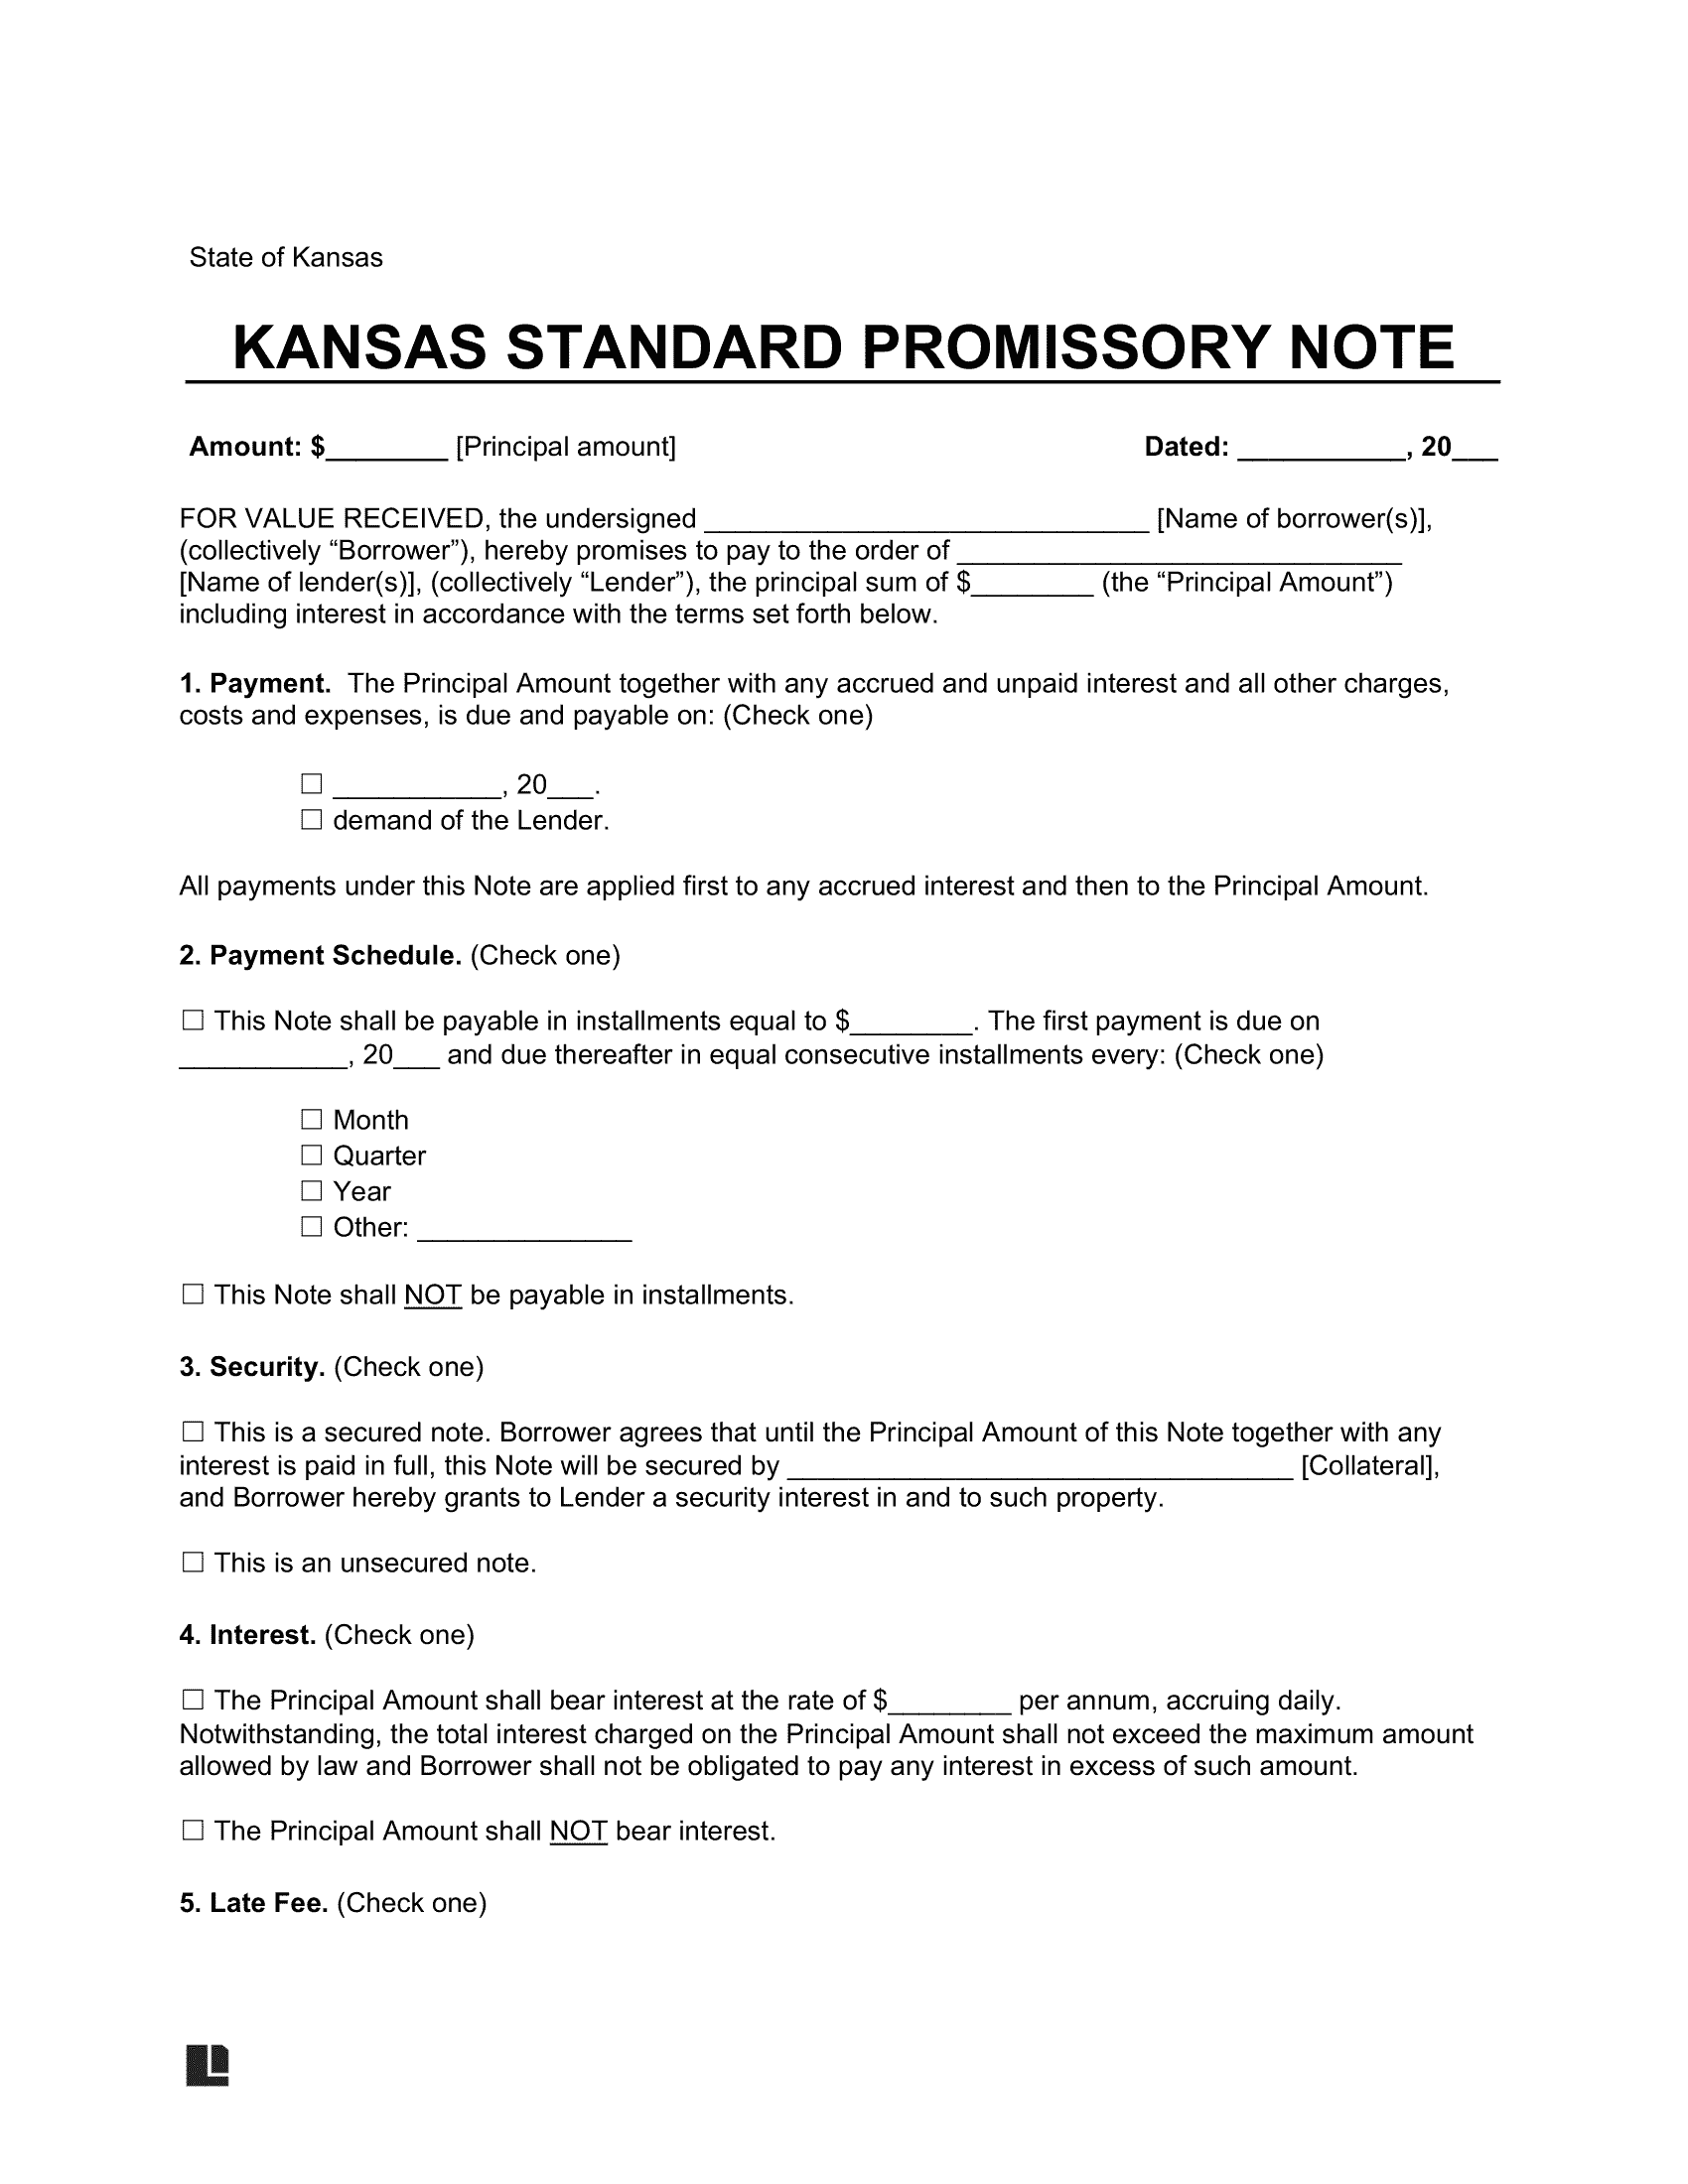 Kansas Standard Promissory Note Template